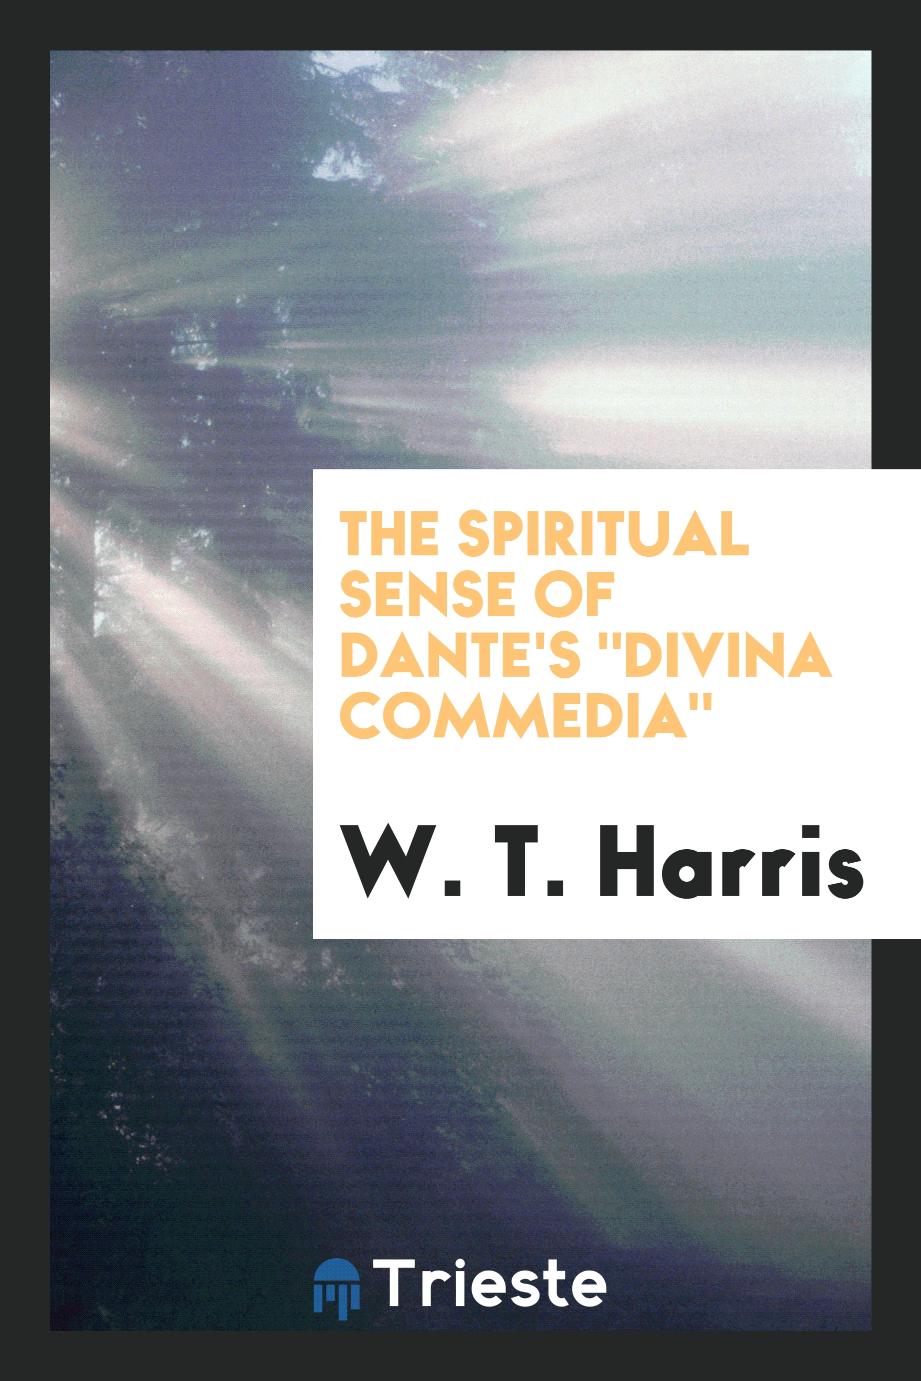 The spiritual sense of Dante's "Divina Commedia"